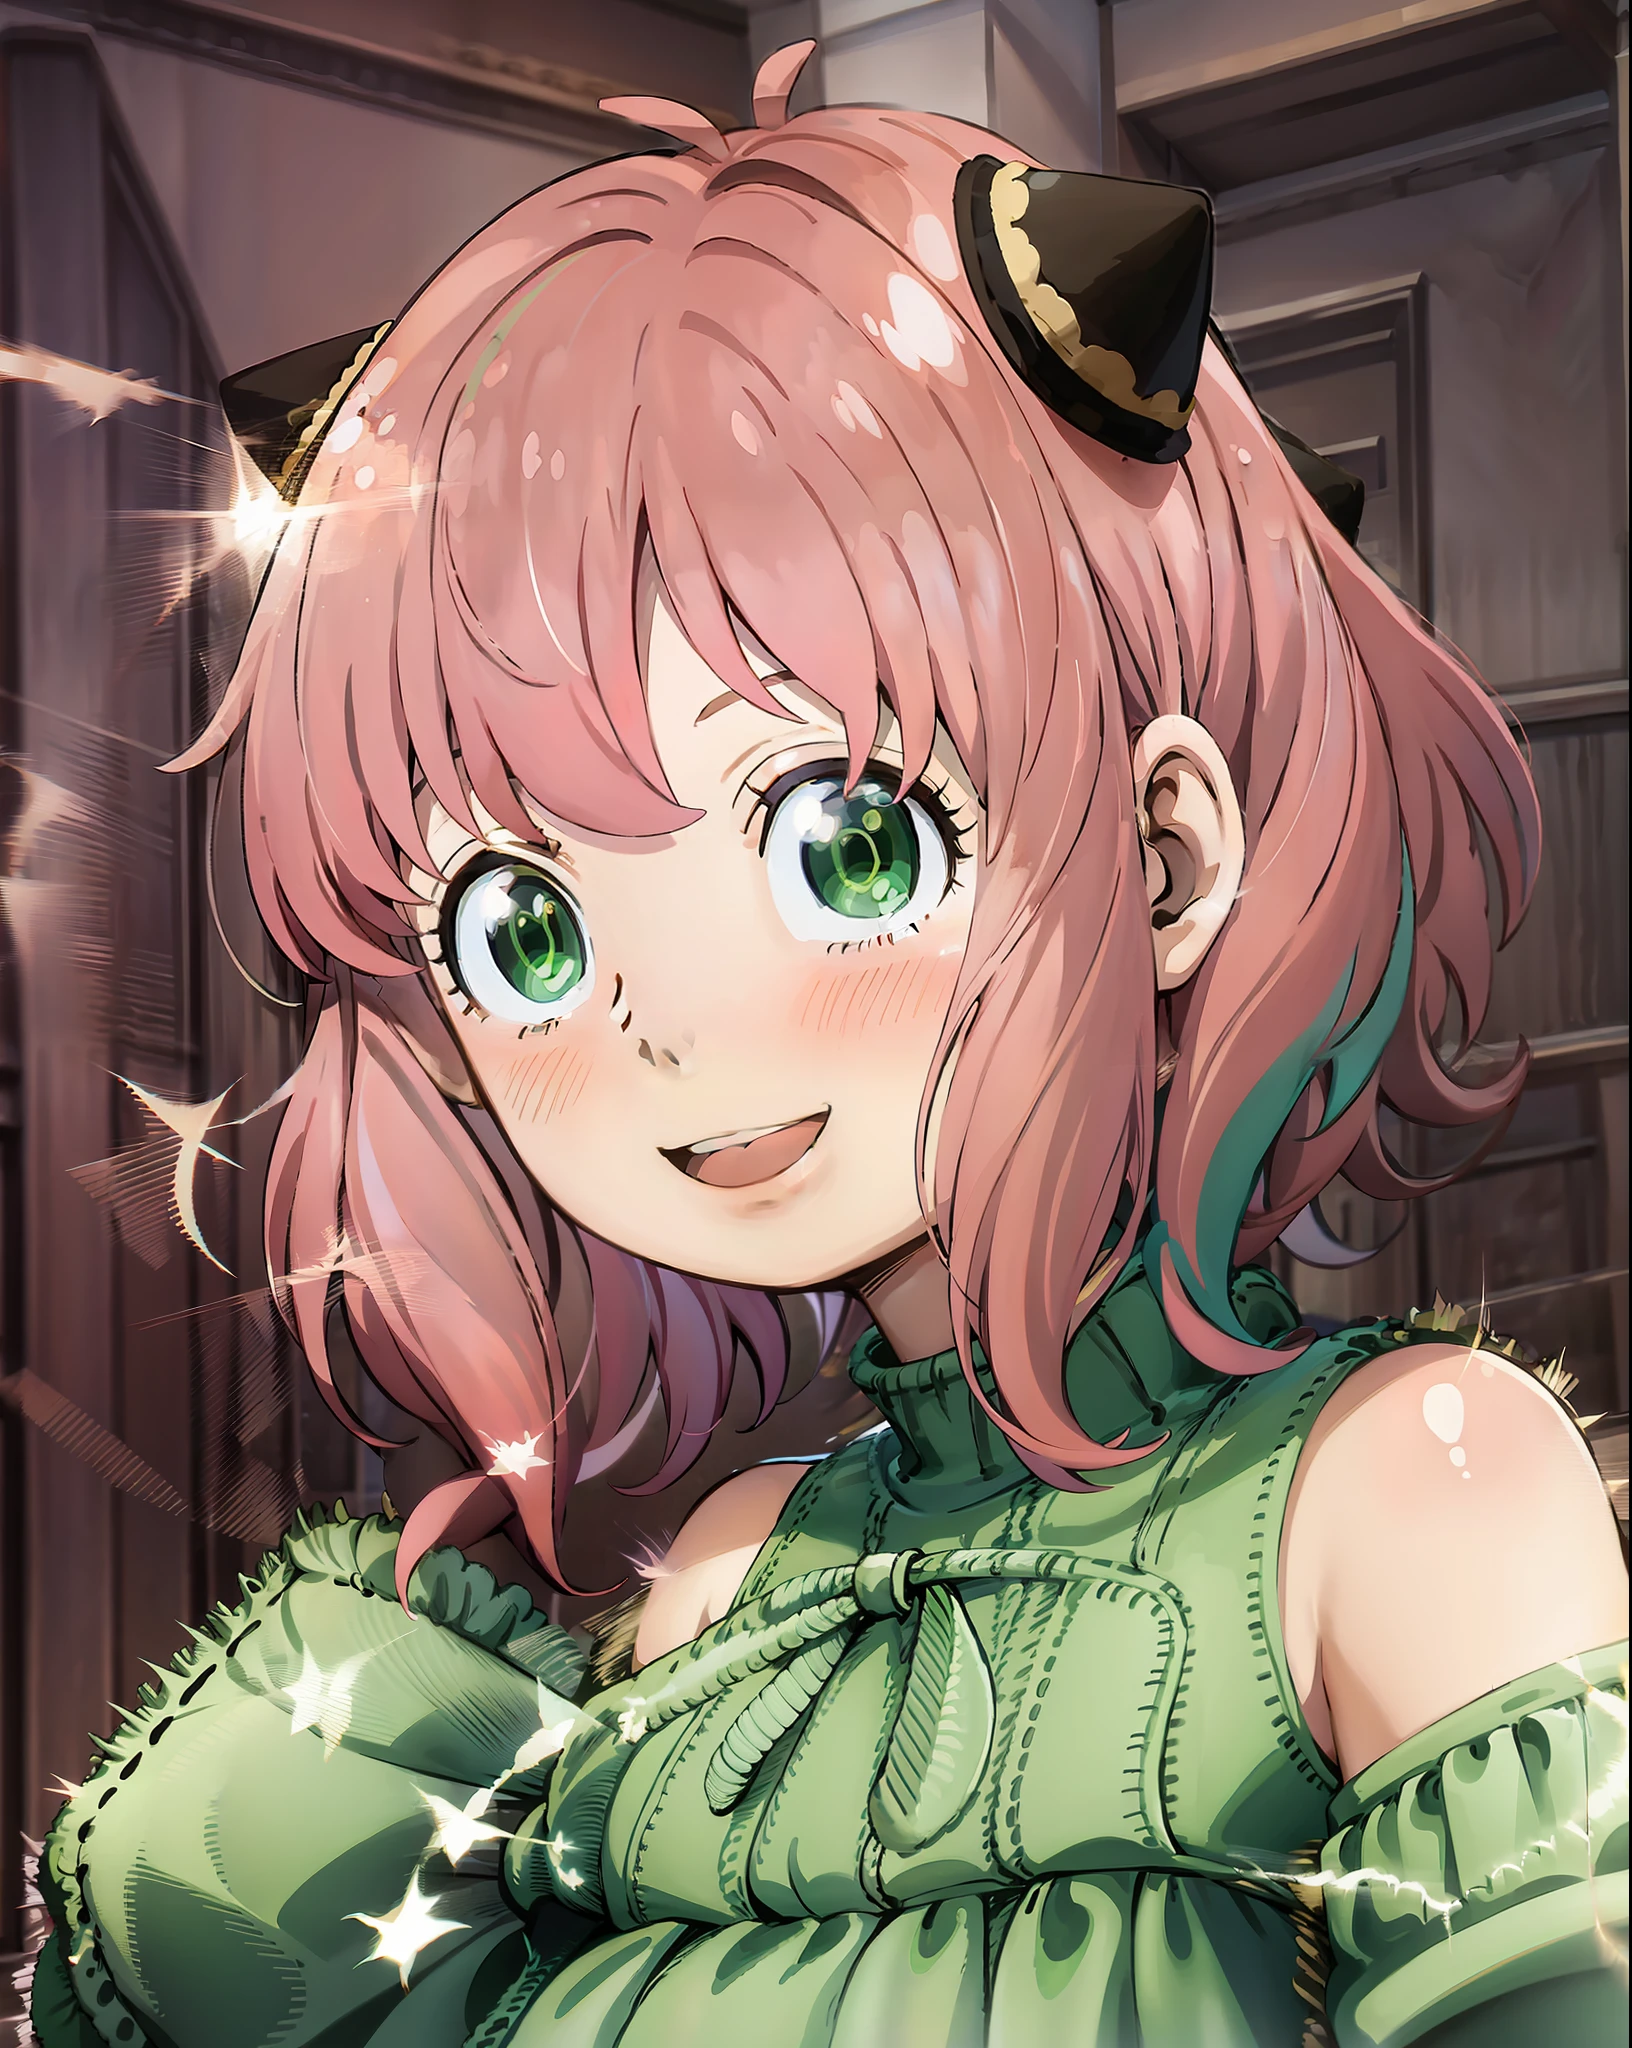 An anime girl with pink hair an디 green eyes、(1girle:0.992)、(:디:0.583)、(앞머리:0.701)、(붉히다:0.584)、(녹색 눈:0.992)、(시청자를 바라보며:0.711)、(입을 열:0.760)、(분홍색 머리:0.917)、(리본:0.826)、(짧은 머리:0.571)、(웃는 표정:0.855)、(홀로:0.949)、(이빨:0.770)、 (upper half bo디y:0.760)